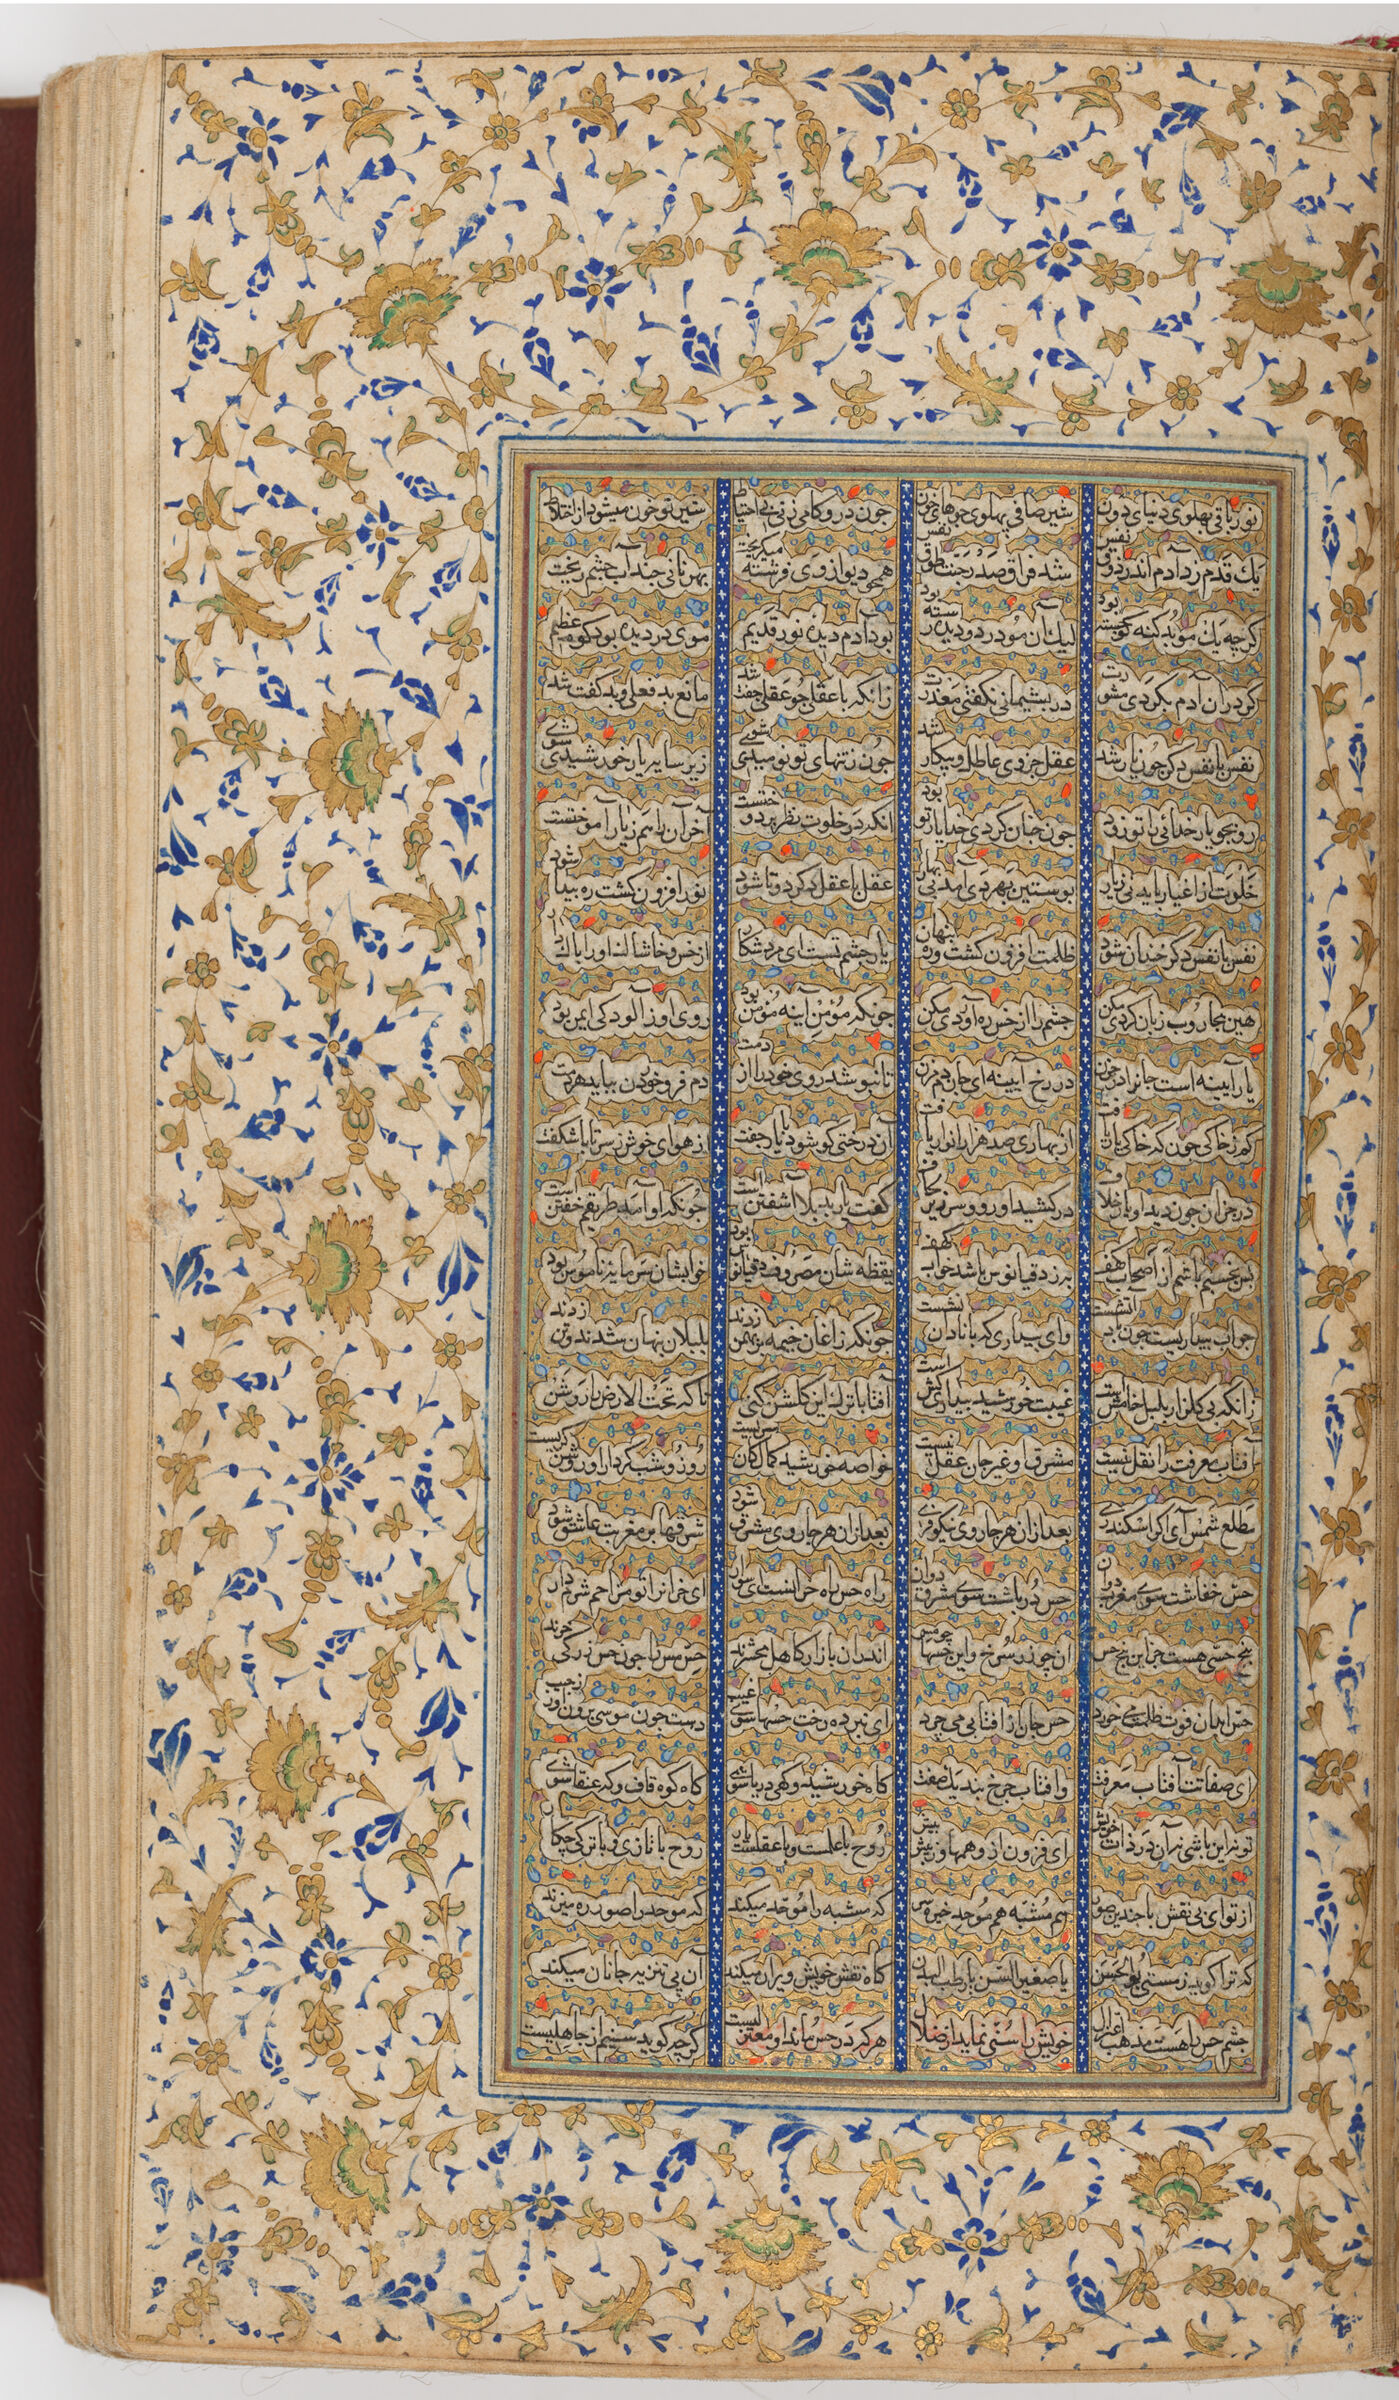 Illuminated Margin And Interlinear Gilt Text (Illumination And Gilt Recto; Text Verso Of Folio 49), Folio From A Manuscript Of The Mathnavi Ma‘navi By Maulana Jalal Al-Din Rumi